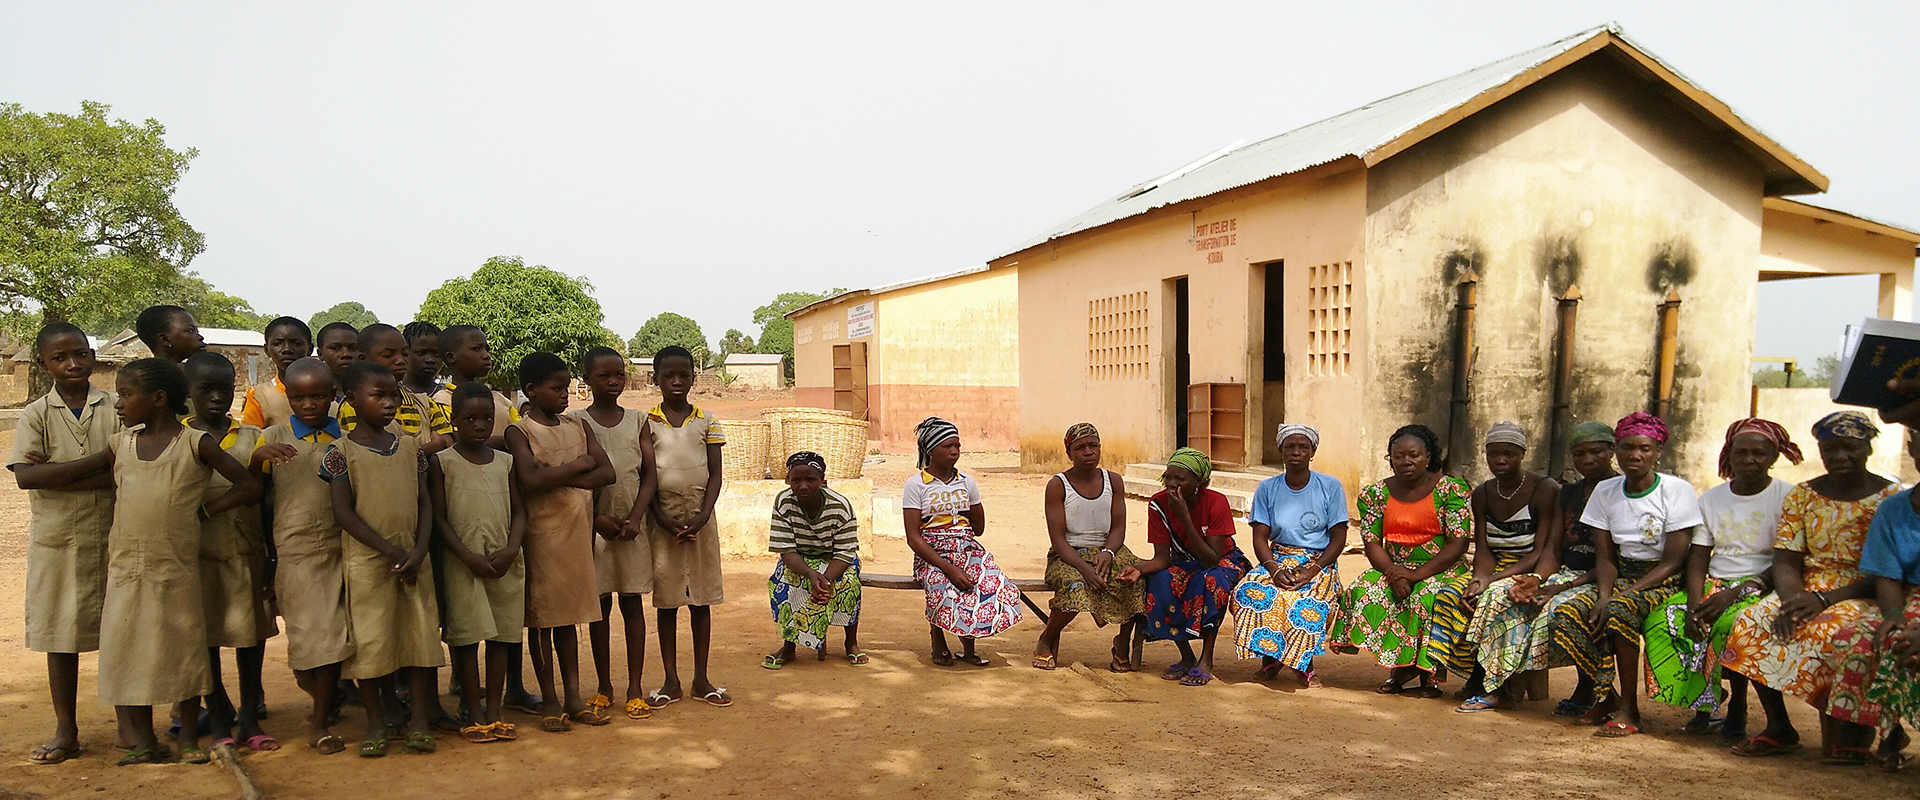 Scuola diritti agroecologia bambine donne Benin Mani Tese 2018